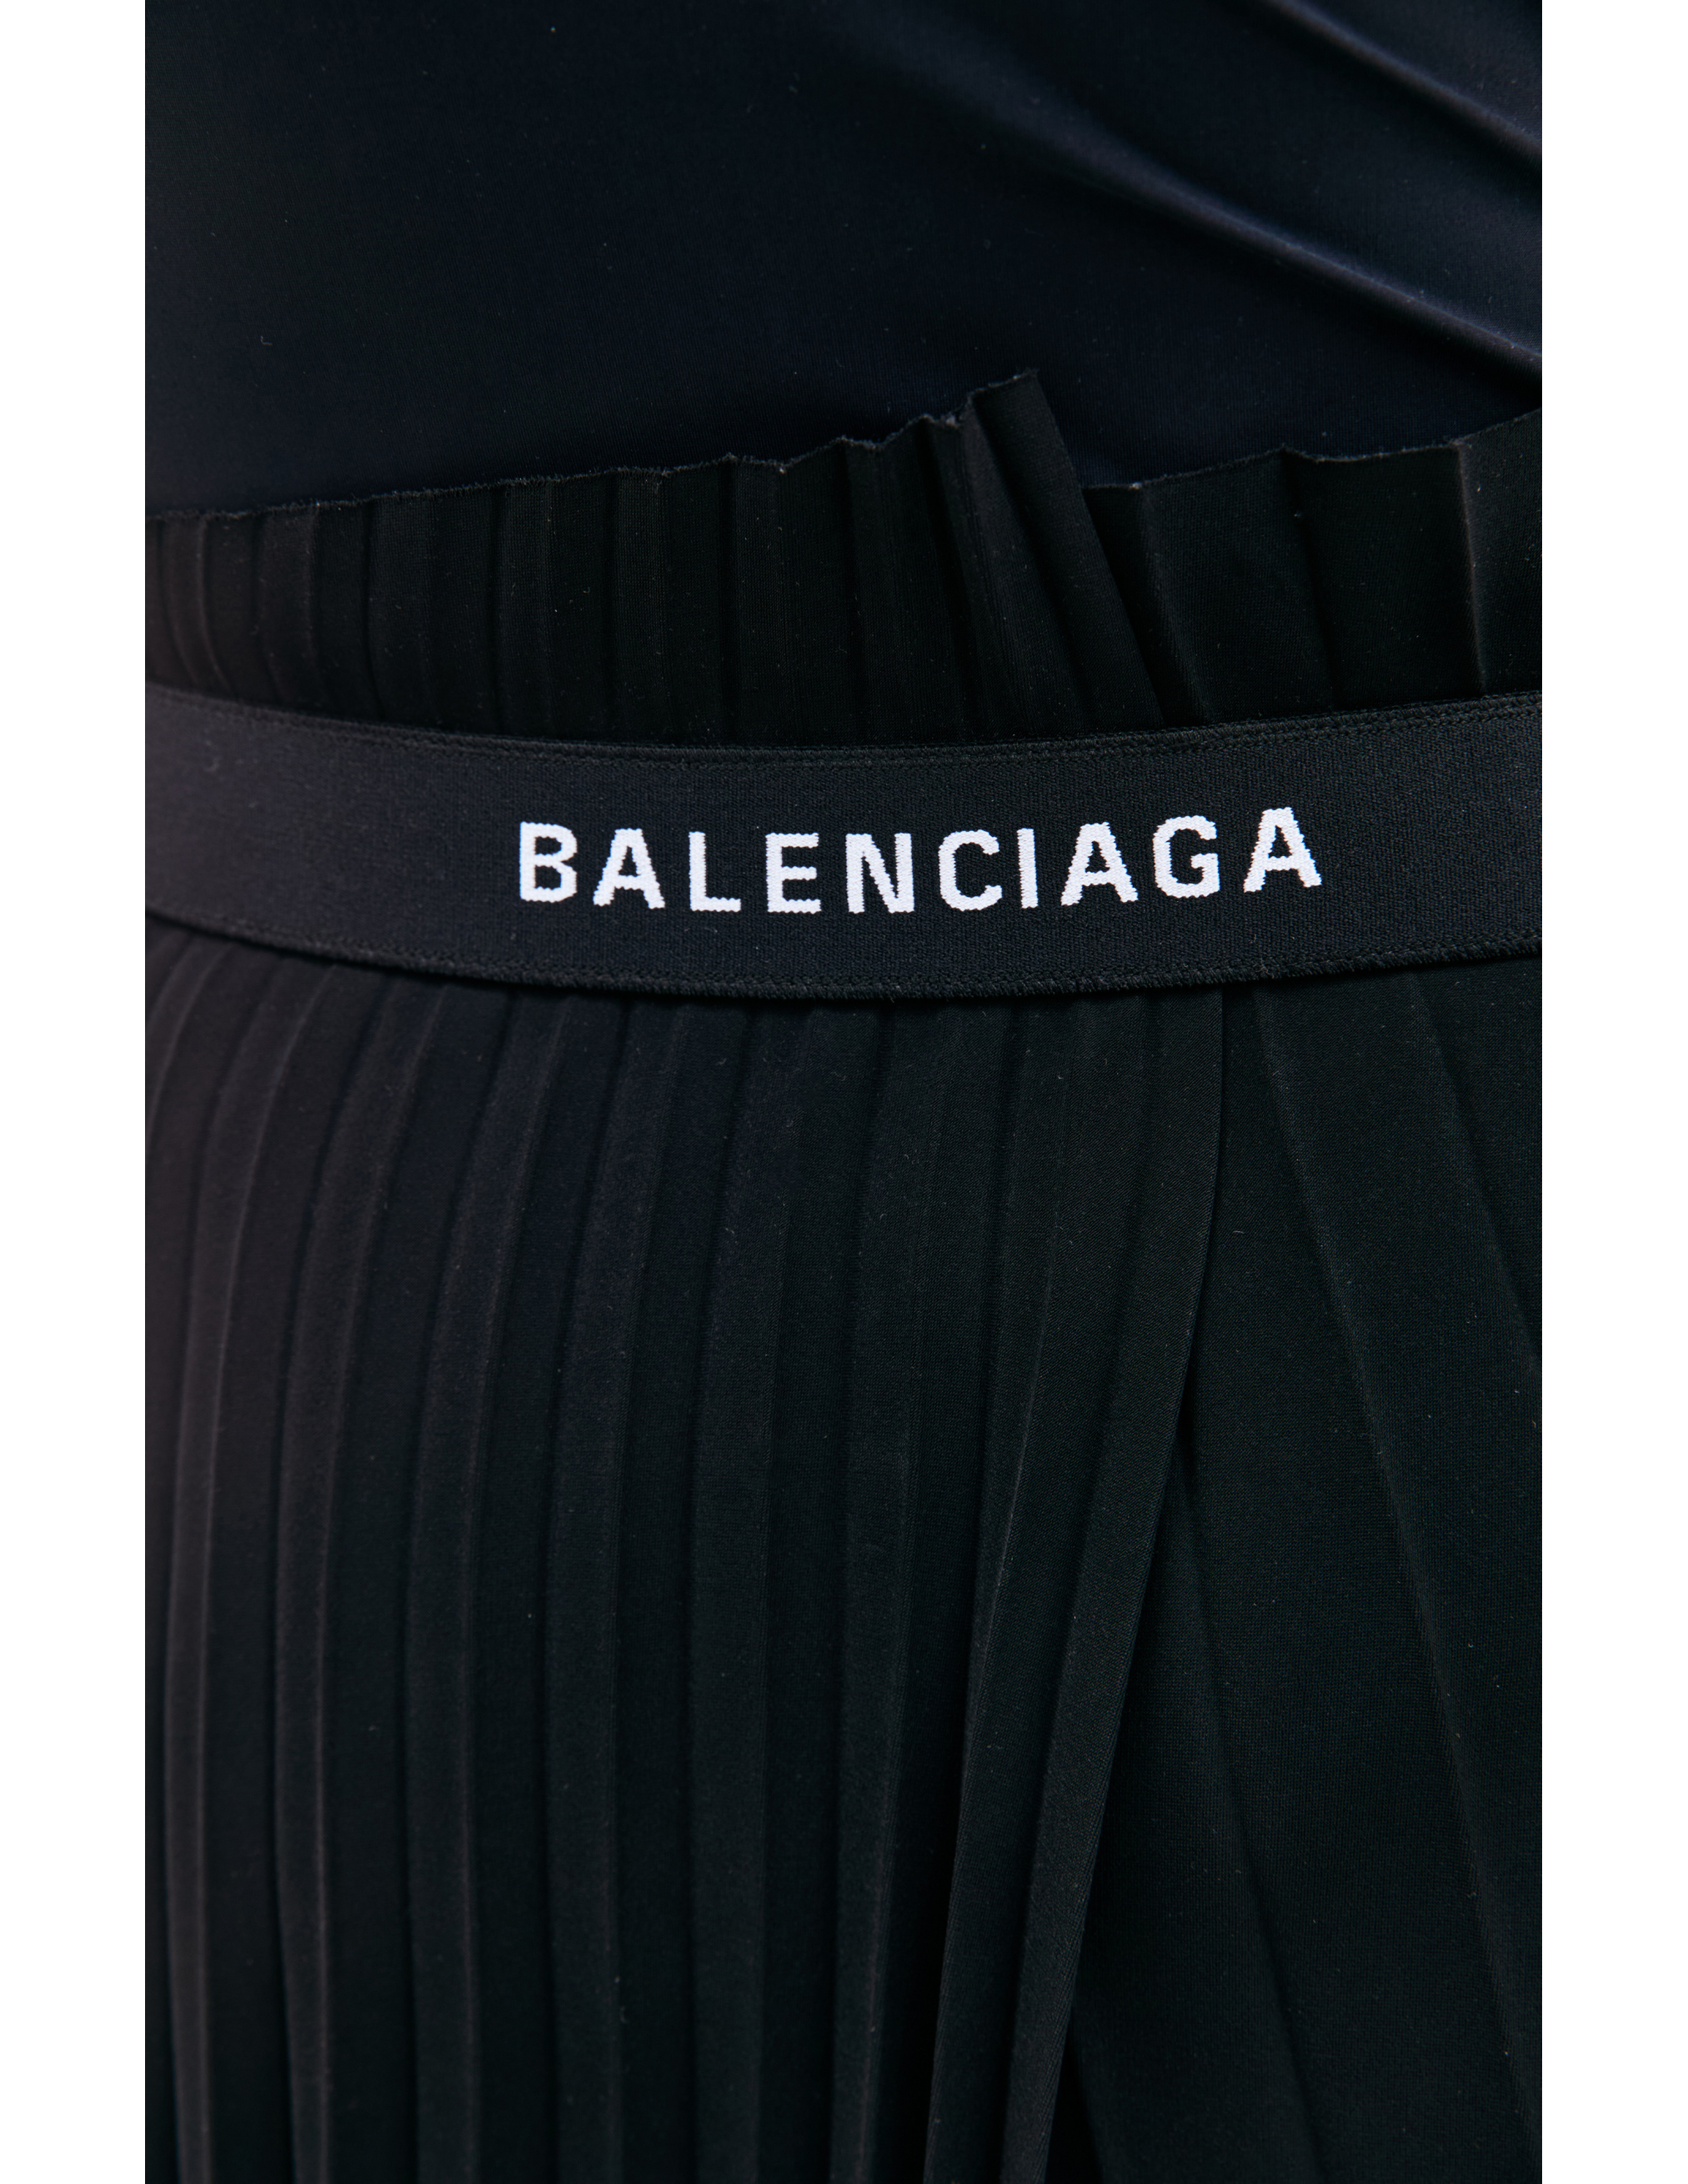 Асимметричная плиссированная юбка Fancy Balenciaga 529757/TYD15/1000, размер 40 529757/TYD15/1000 - фото 4